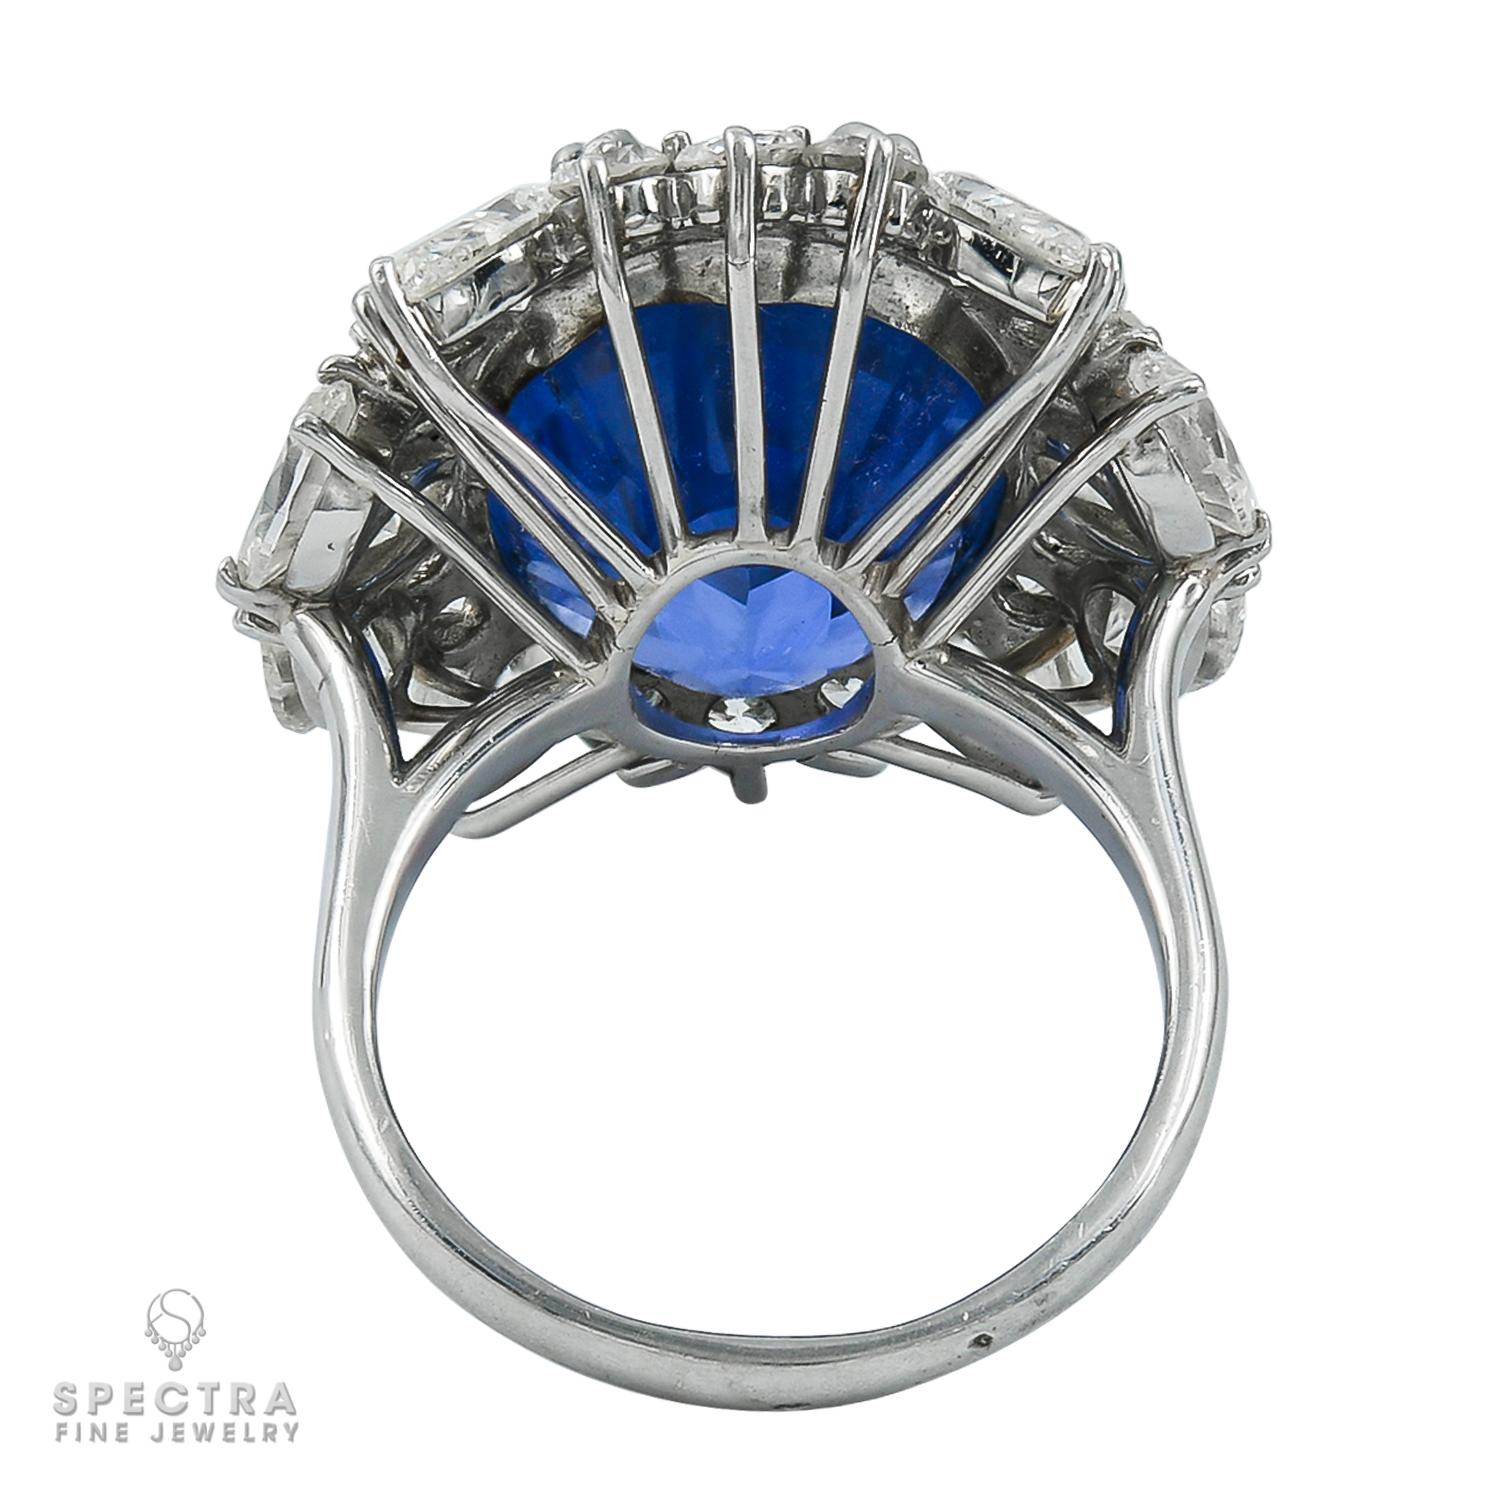 Oval Cut Spectra Fine Jewelry Certified 26.19 Carat Ceylon Sapphire Diamond Ring For Sale